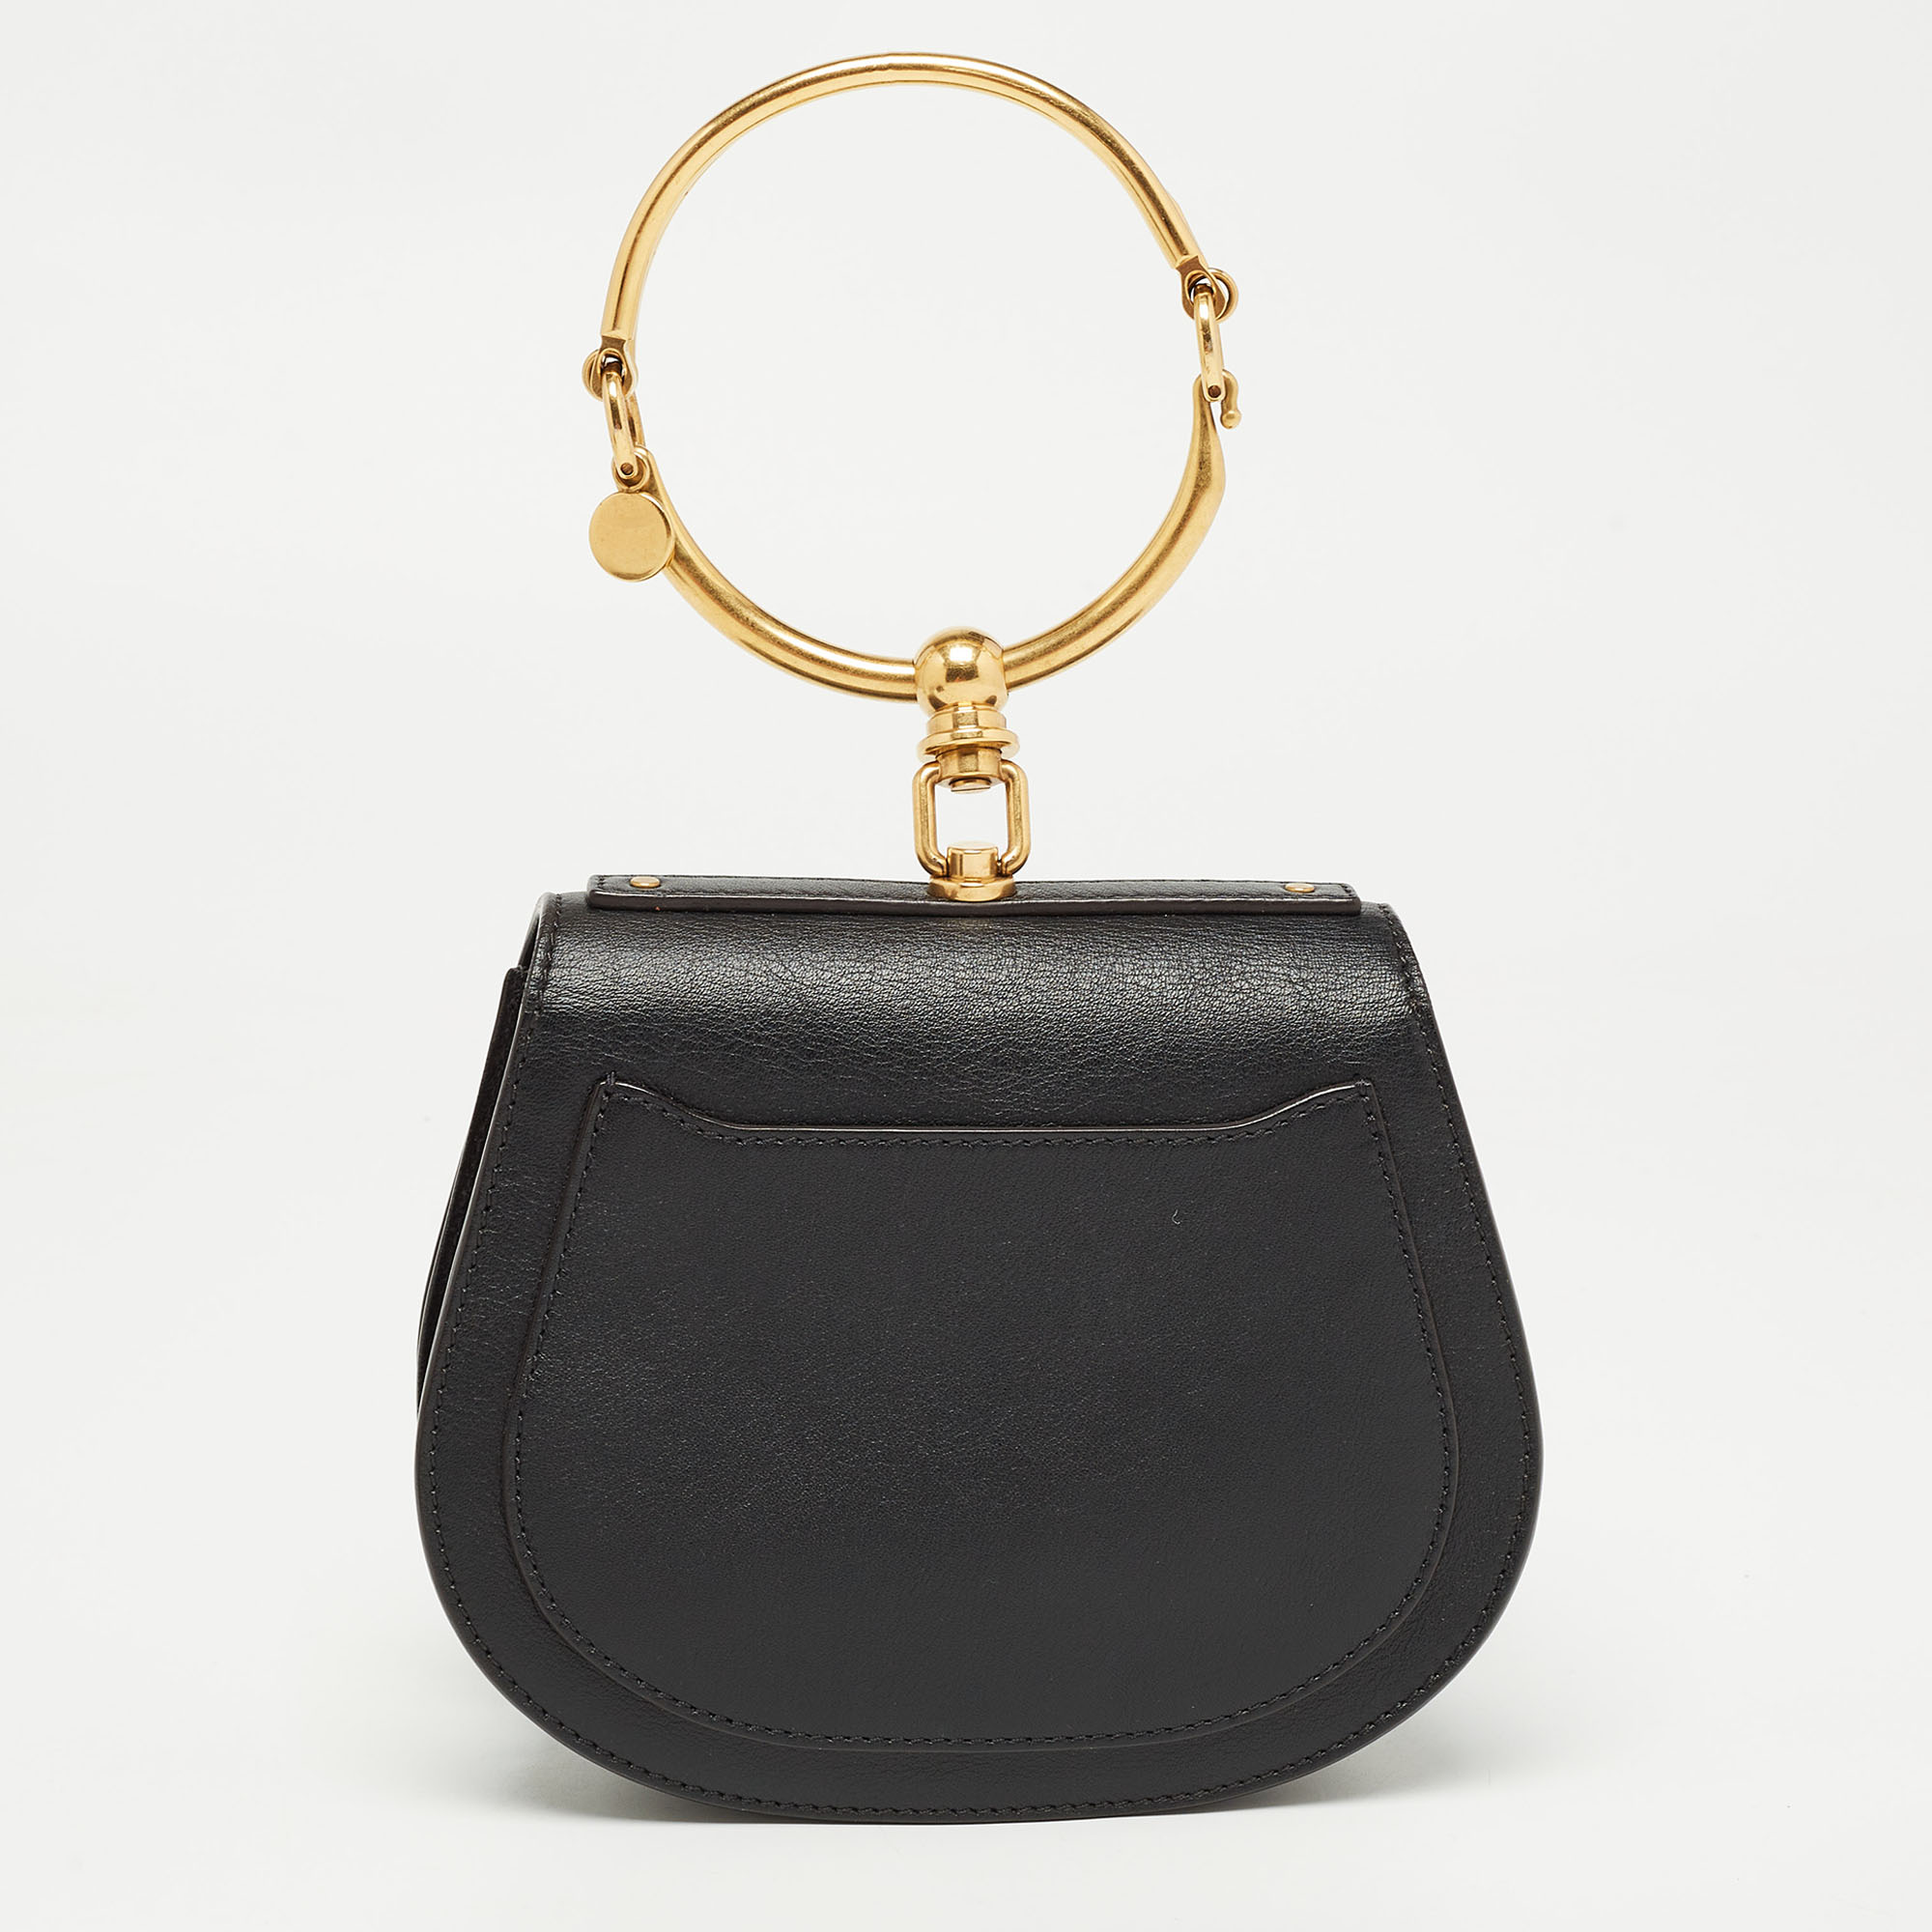 Chloe Black Leather Small Nile Bracelet Bag